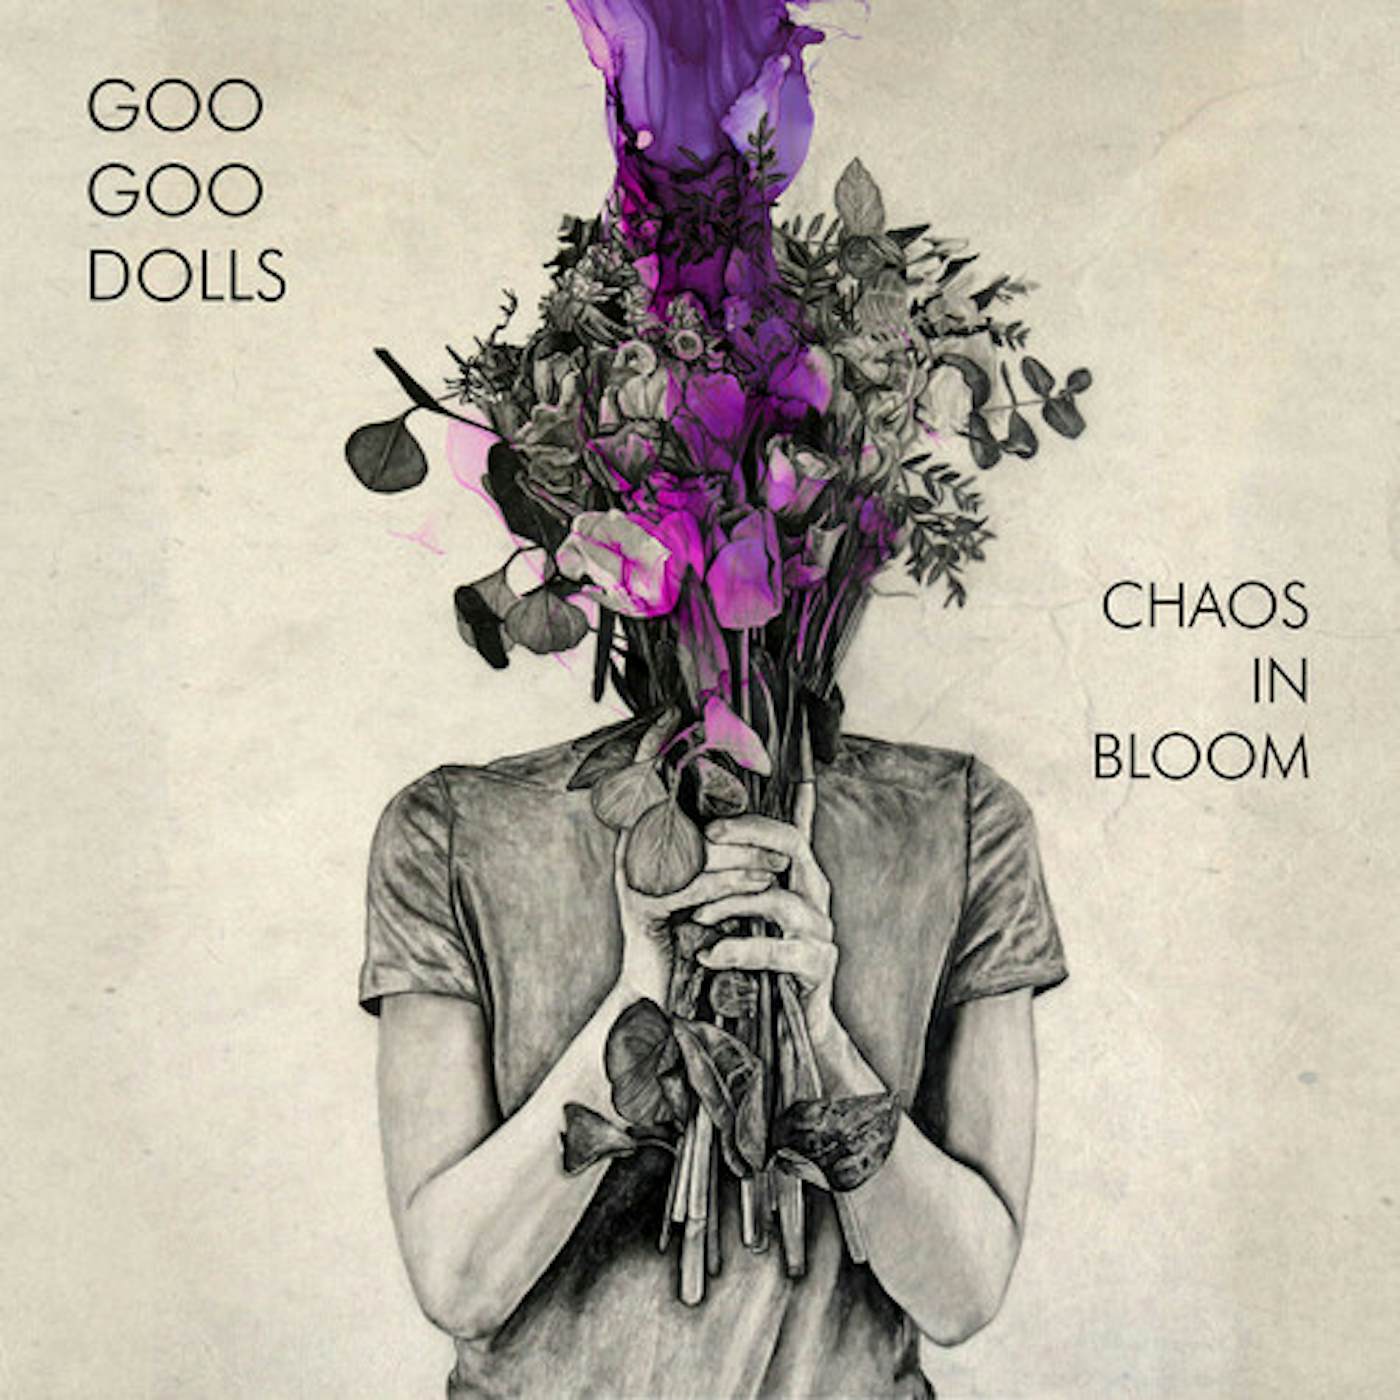 The Goo Goo Dolls CHAOS IN BLOOM CD